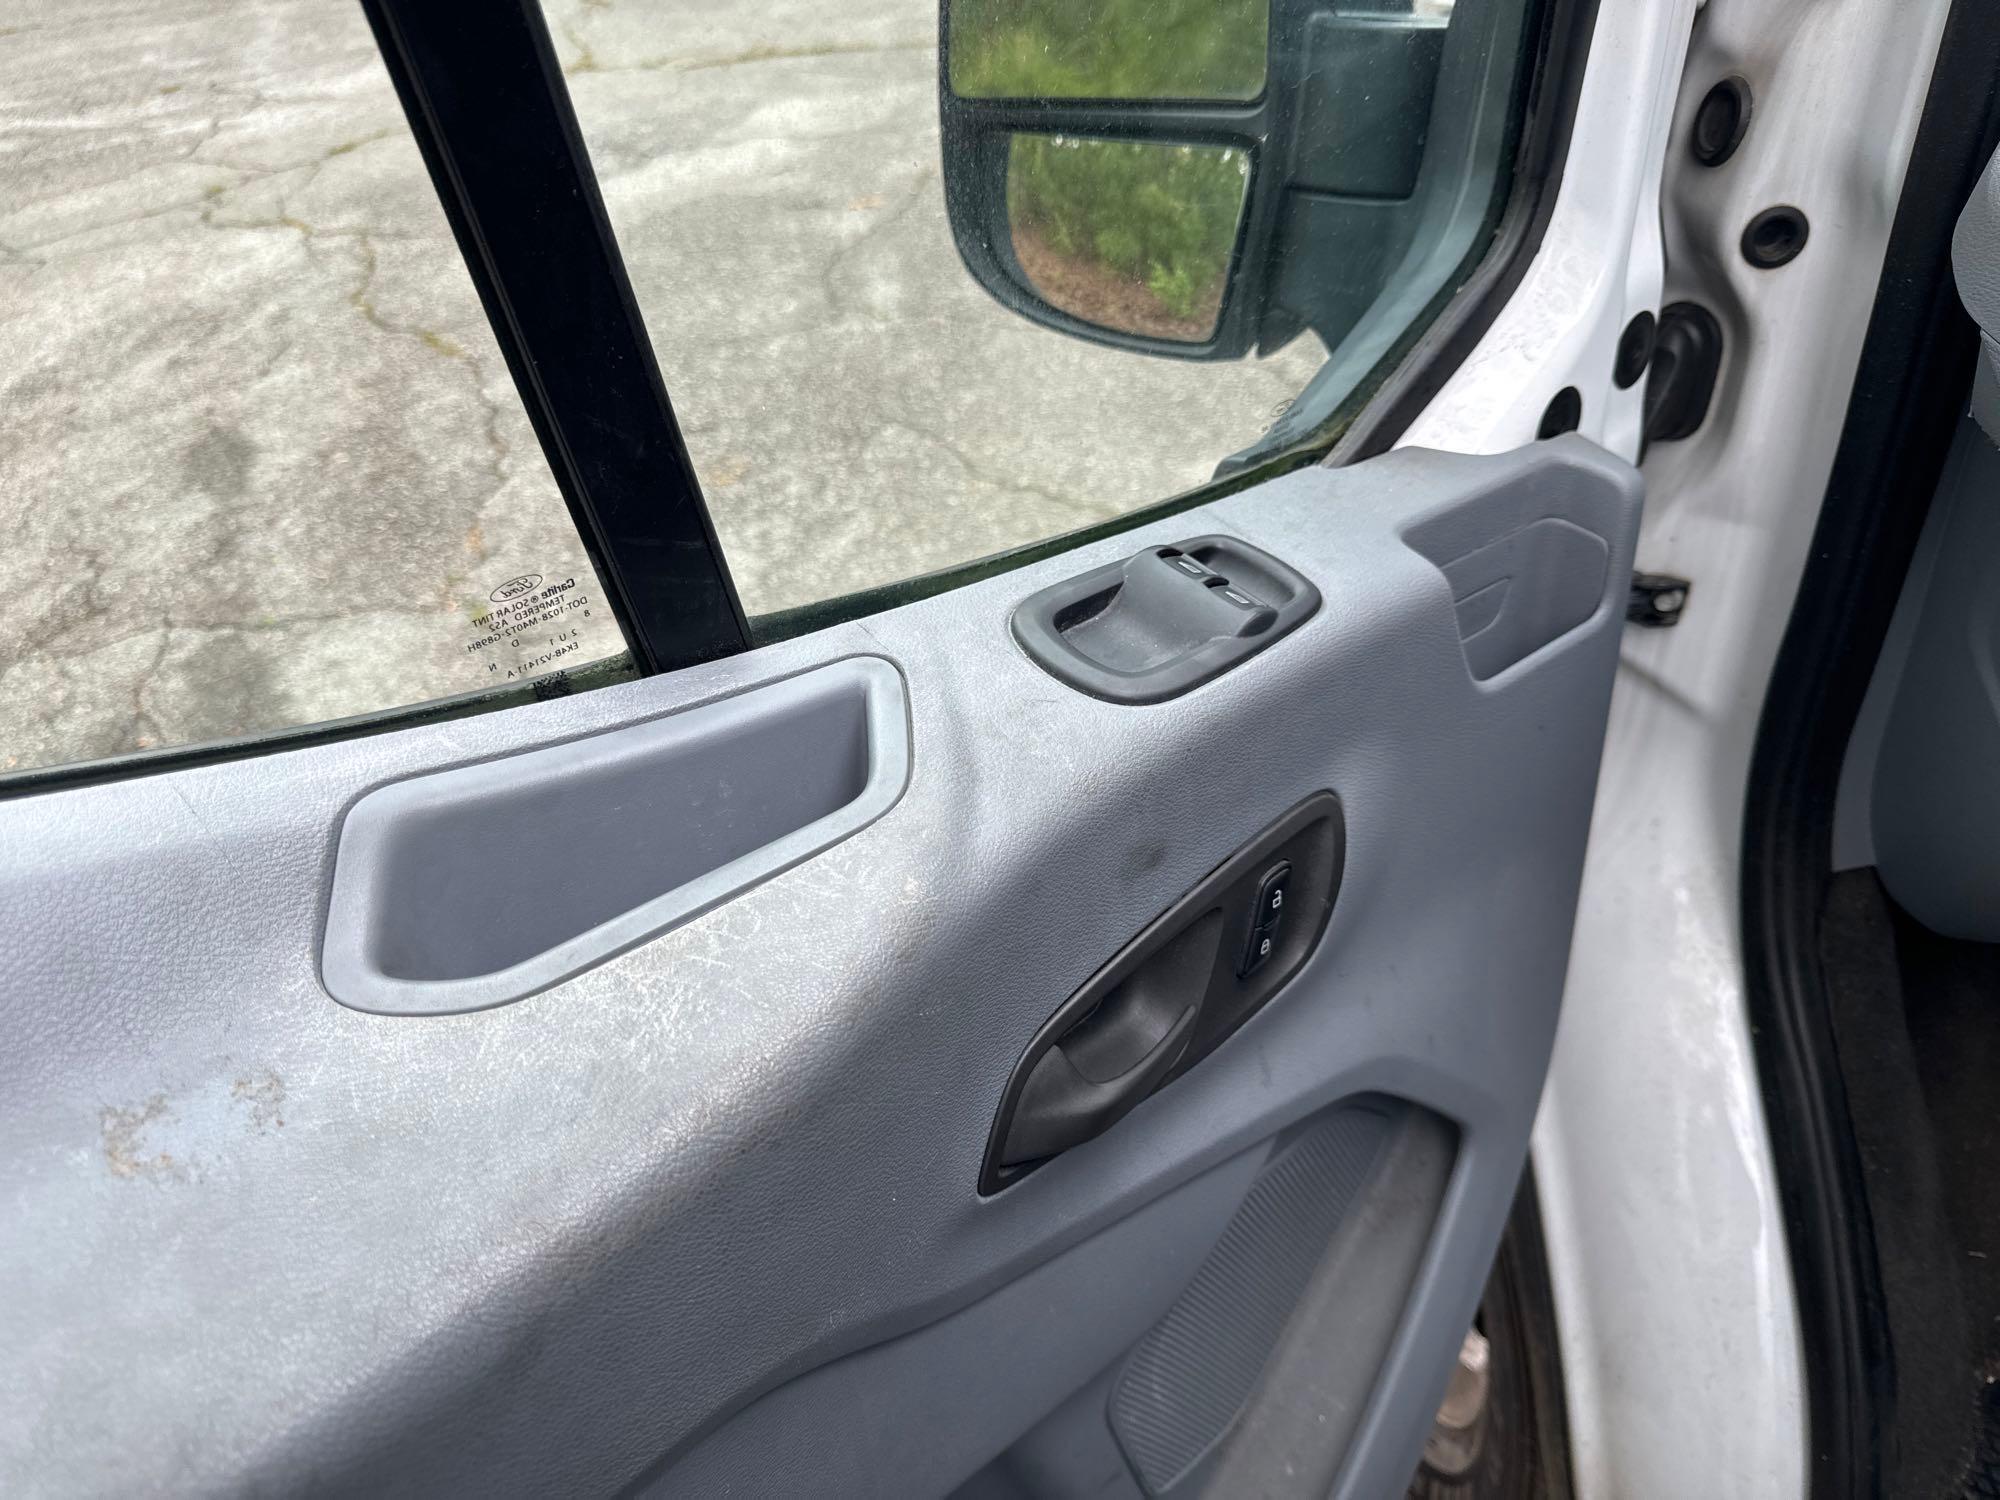 2018 Ford Transit Wagon Van, VIN # 1FBZX2YG9JKA97127